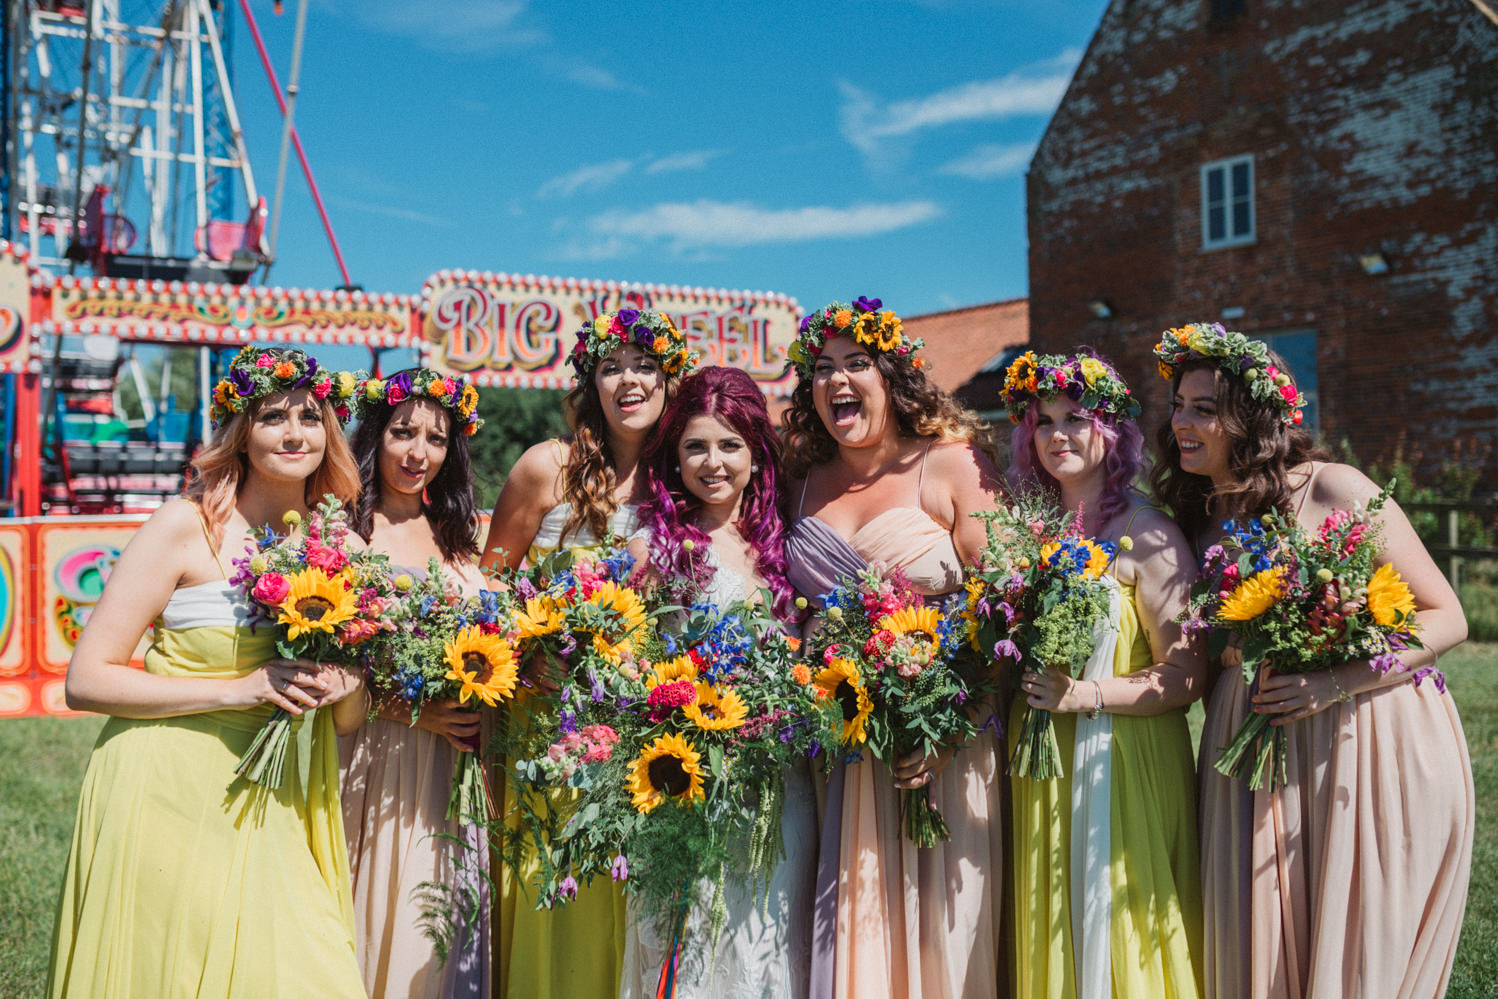 godwick barn wedding photography helen anderson and her bridesmaids